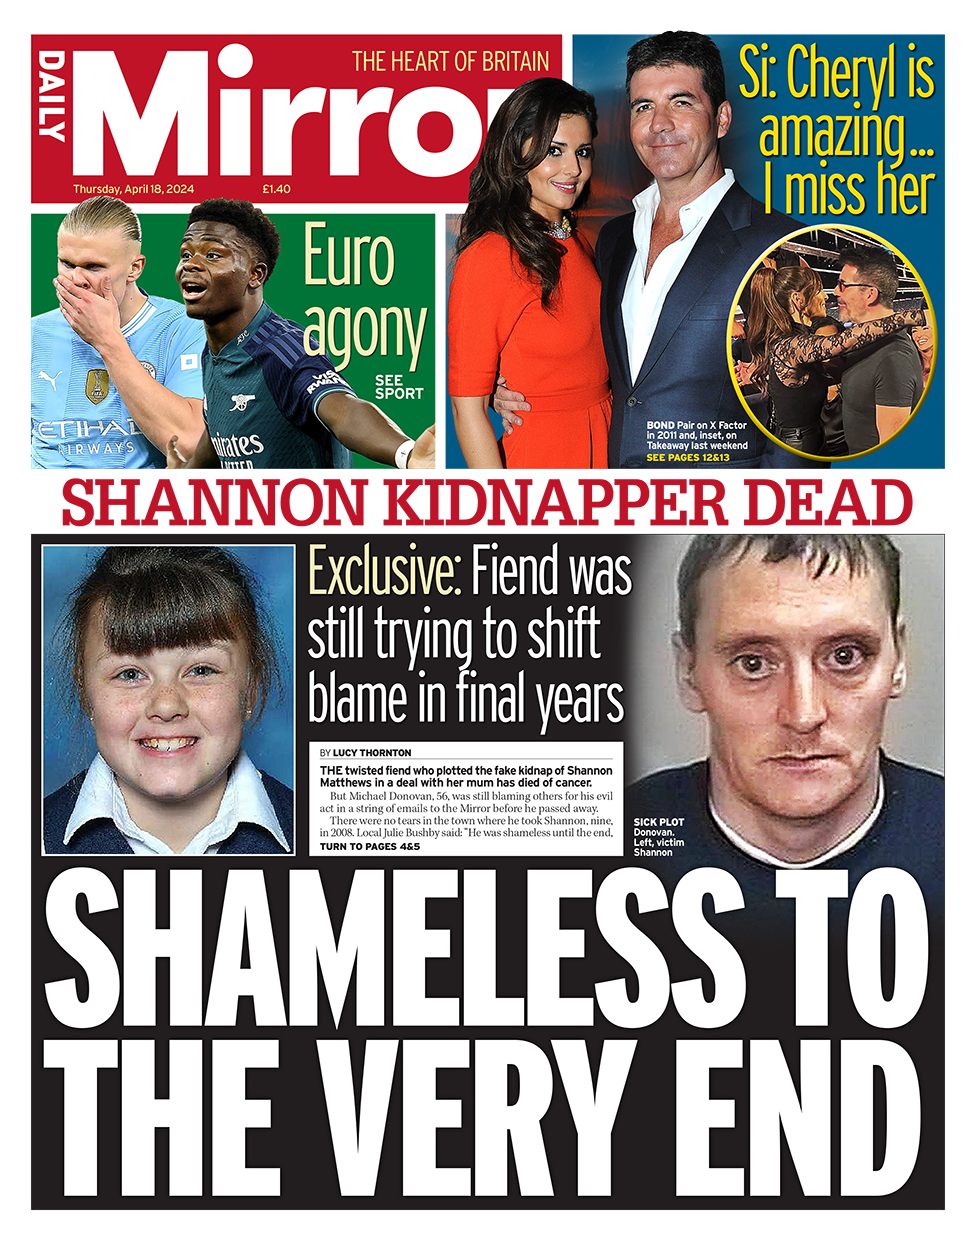 The headlien in the Mirror reads: "Shannon kidnapper dead".